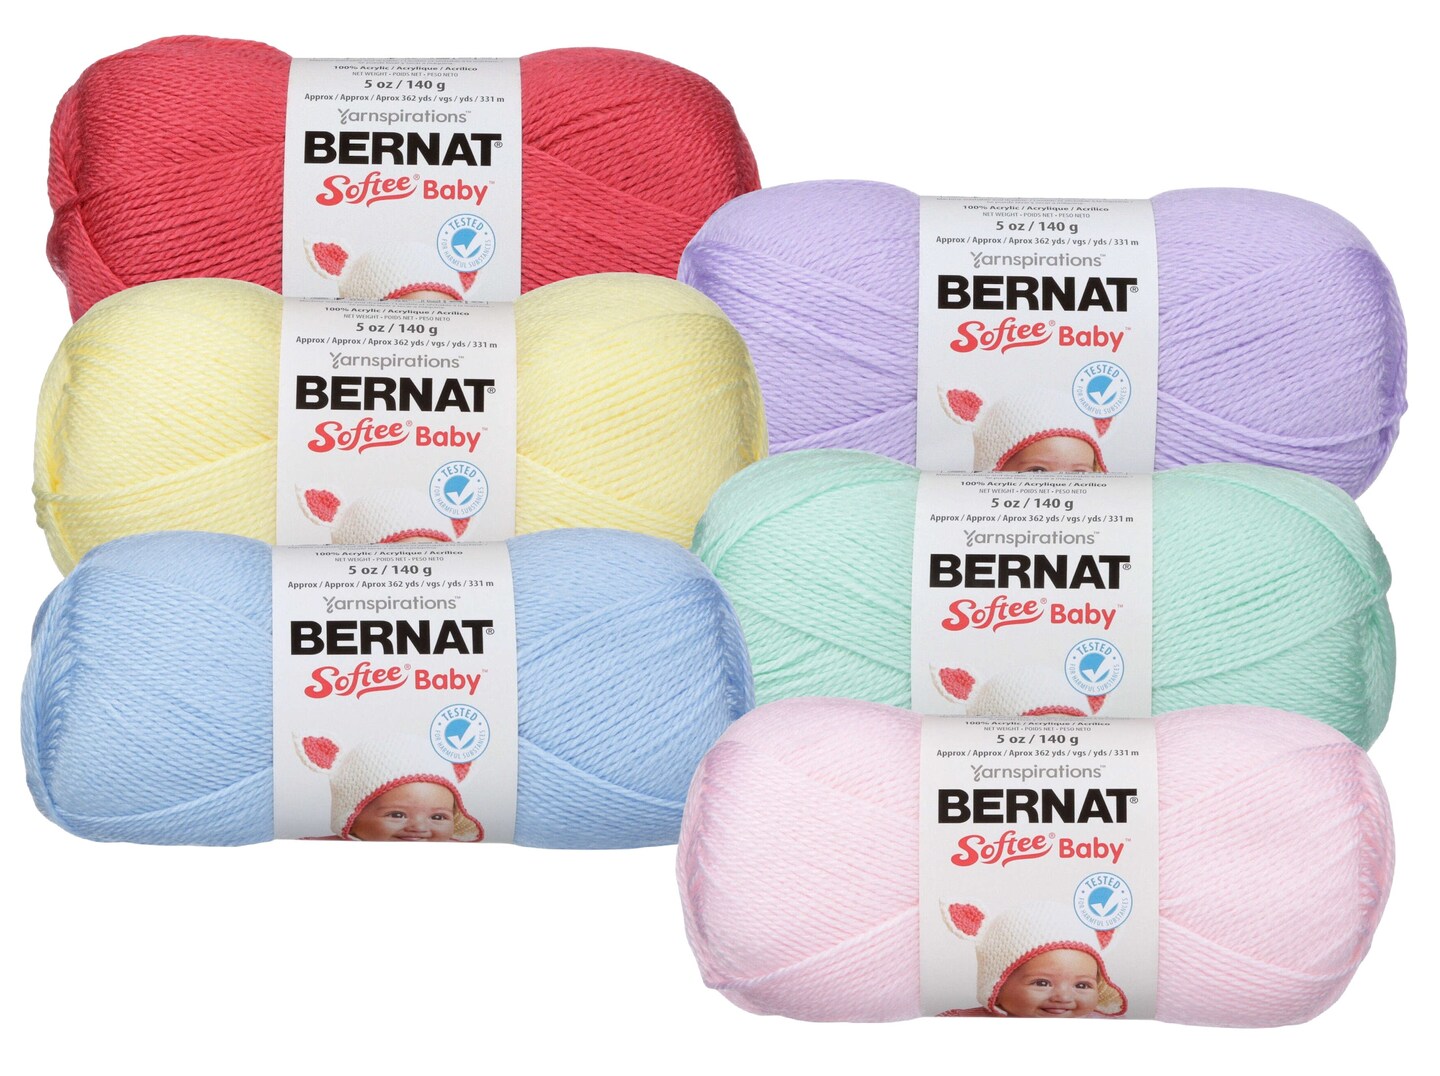 Bernat Softee Baby Yarn - 6 Color Assortment (Pastels)